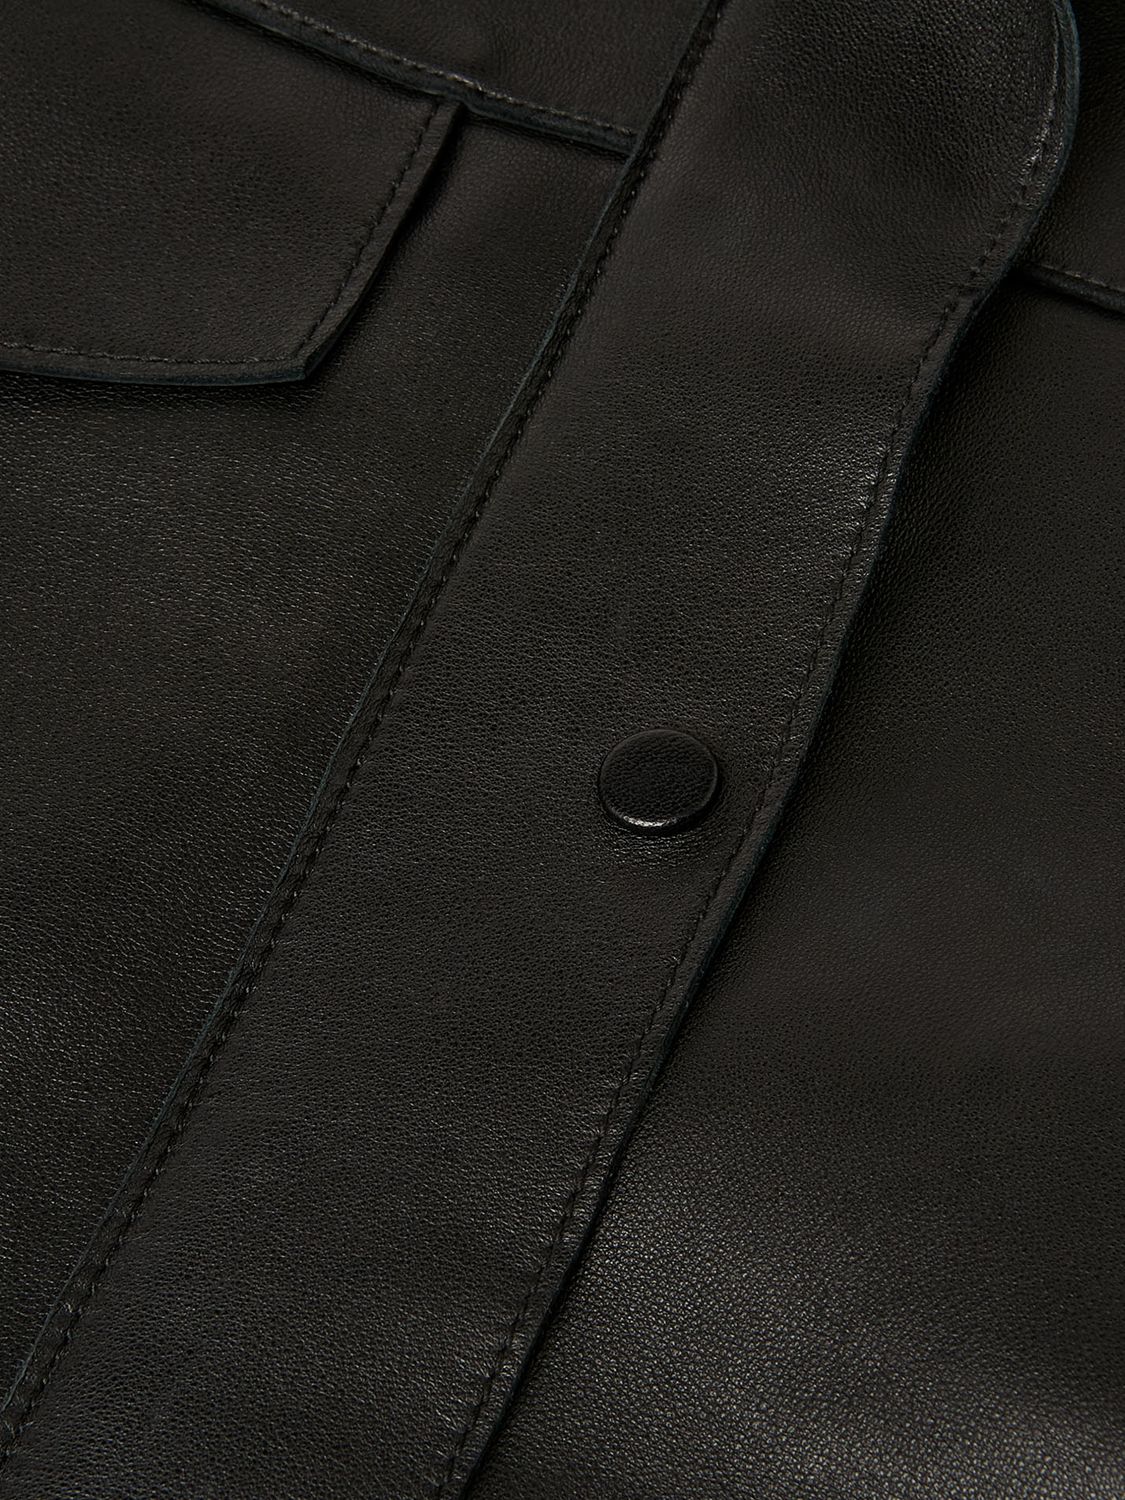 Whistles Clean Bonded Leather Jacket, Black at John Lewis & Partners